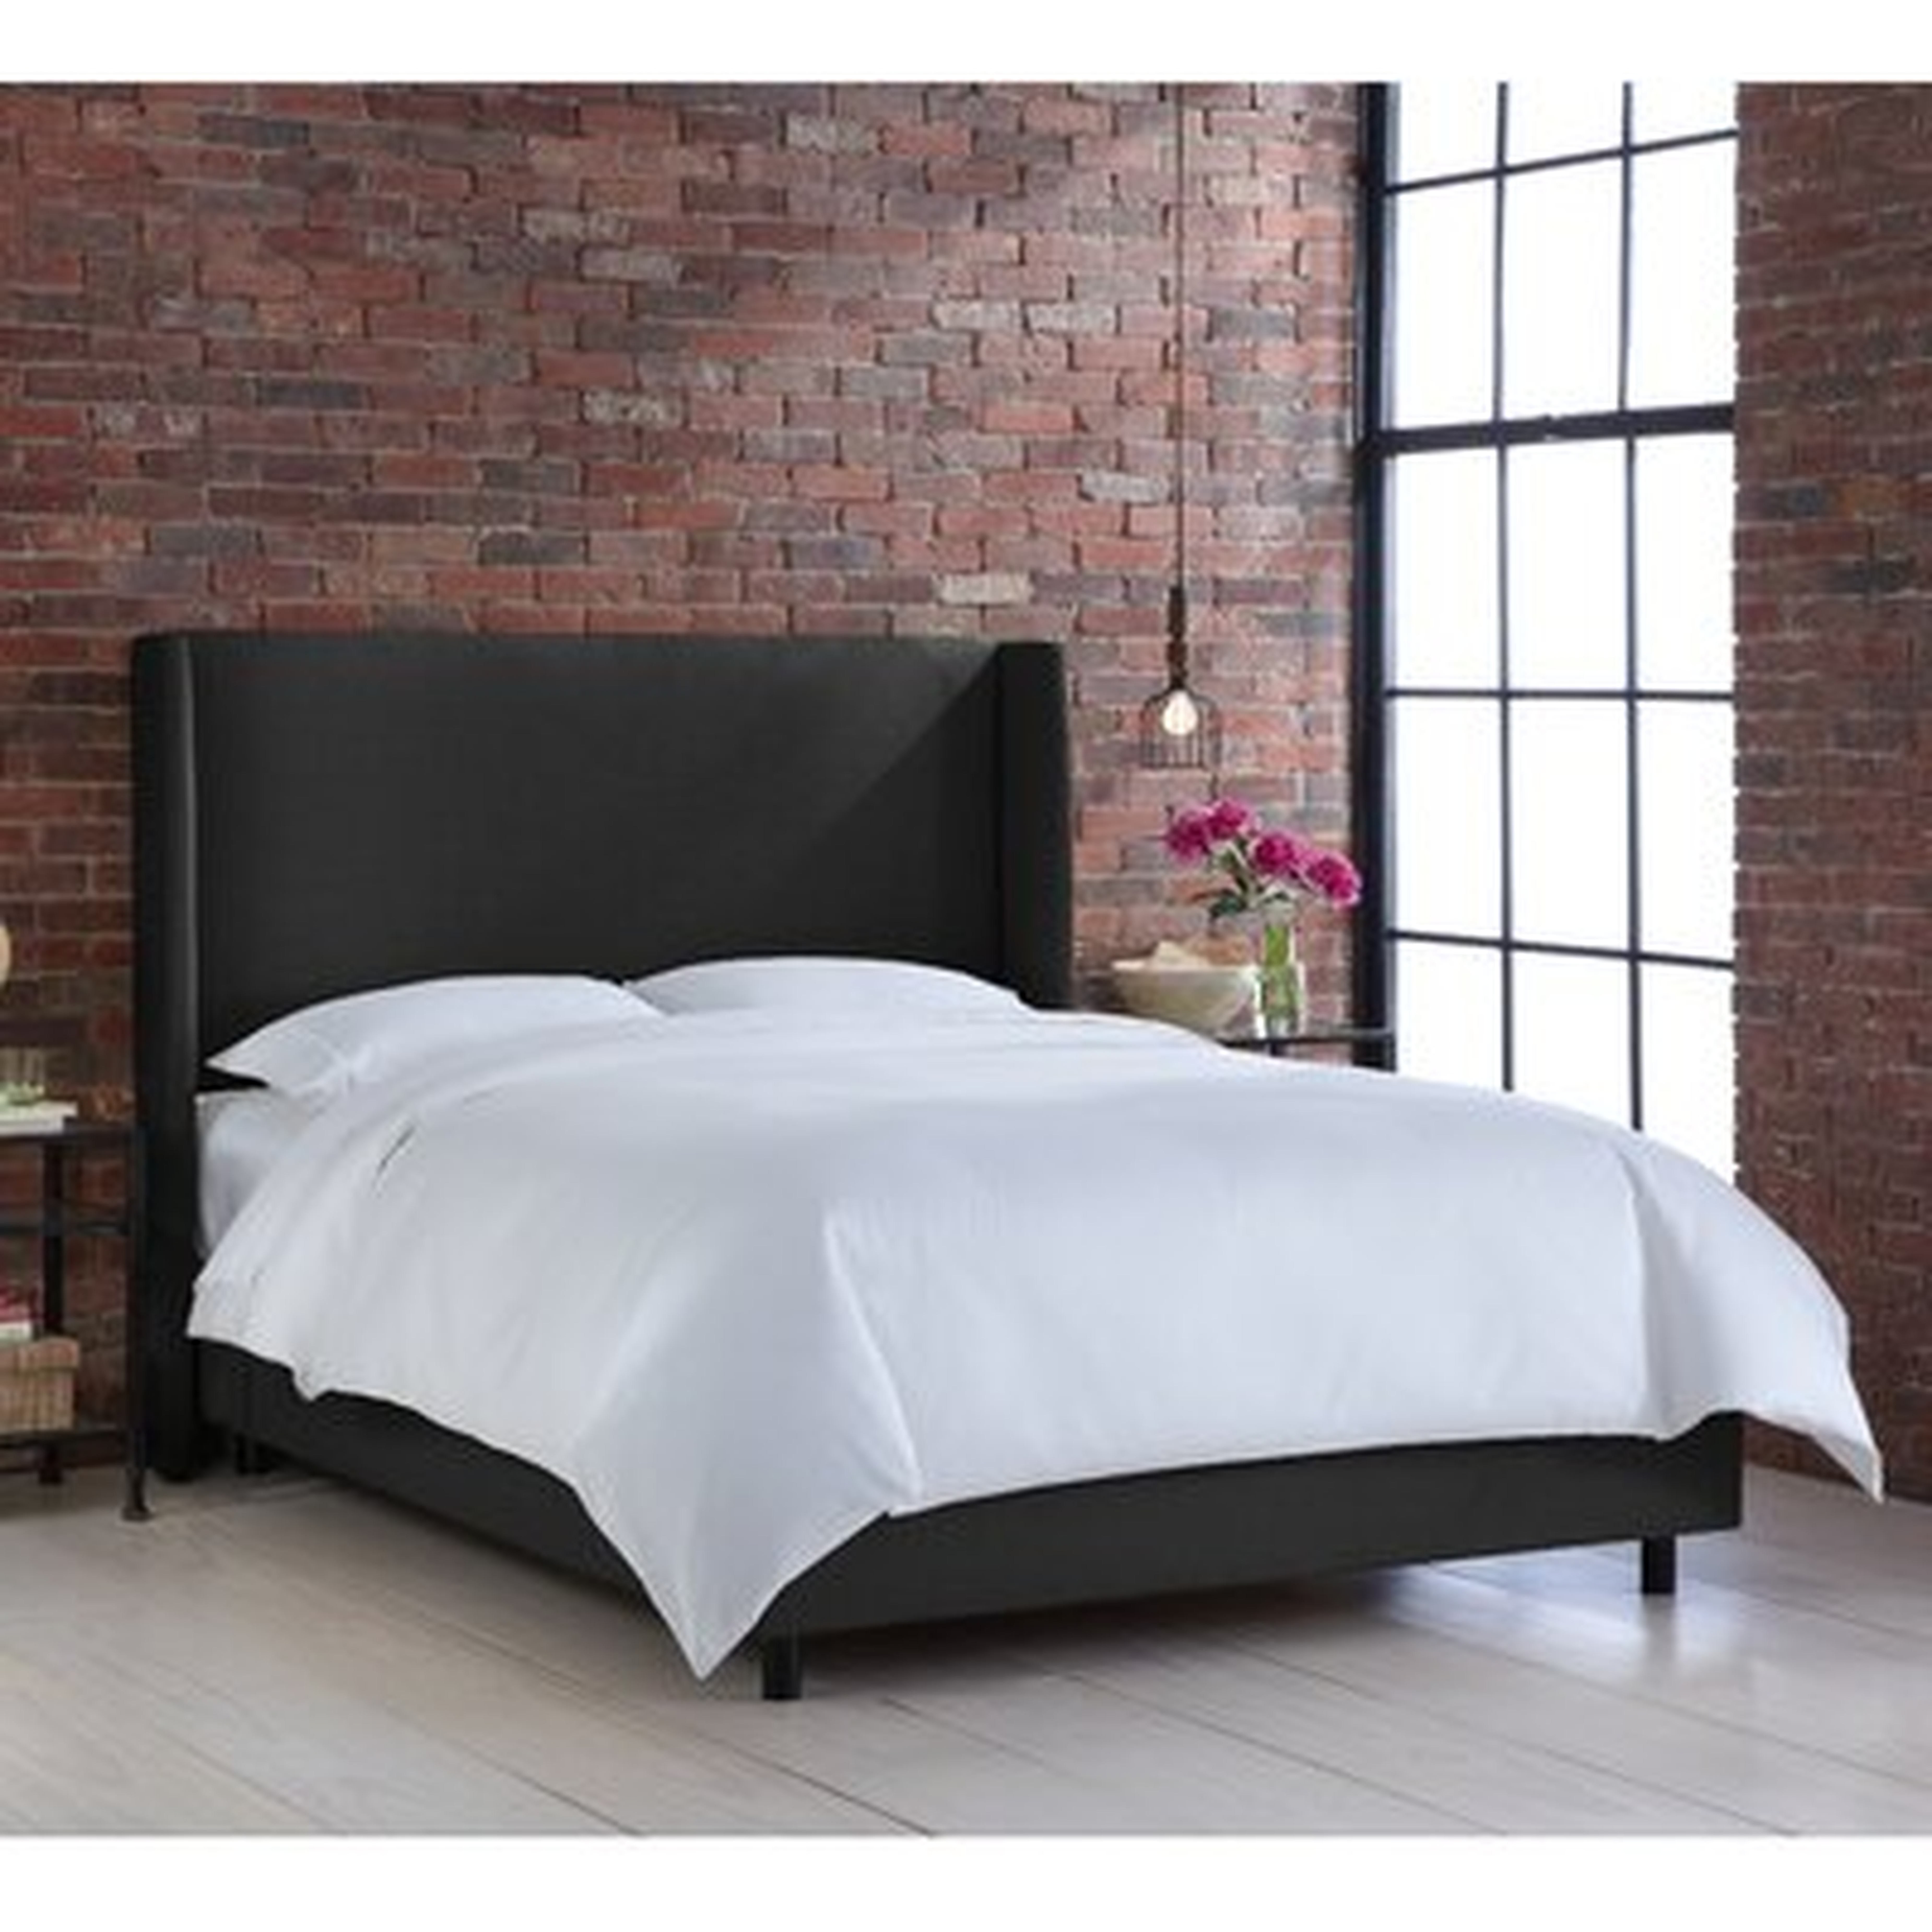 Tilly Upholstered Low Profile Standard Bed - Wayfair